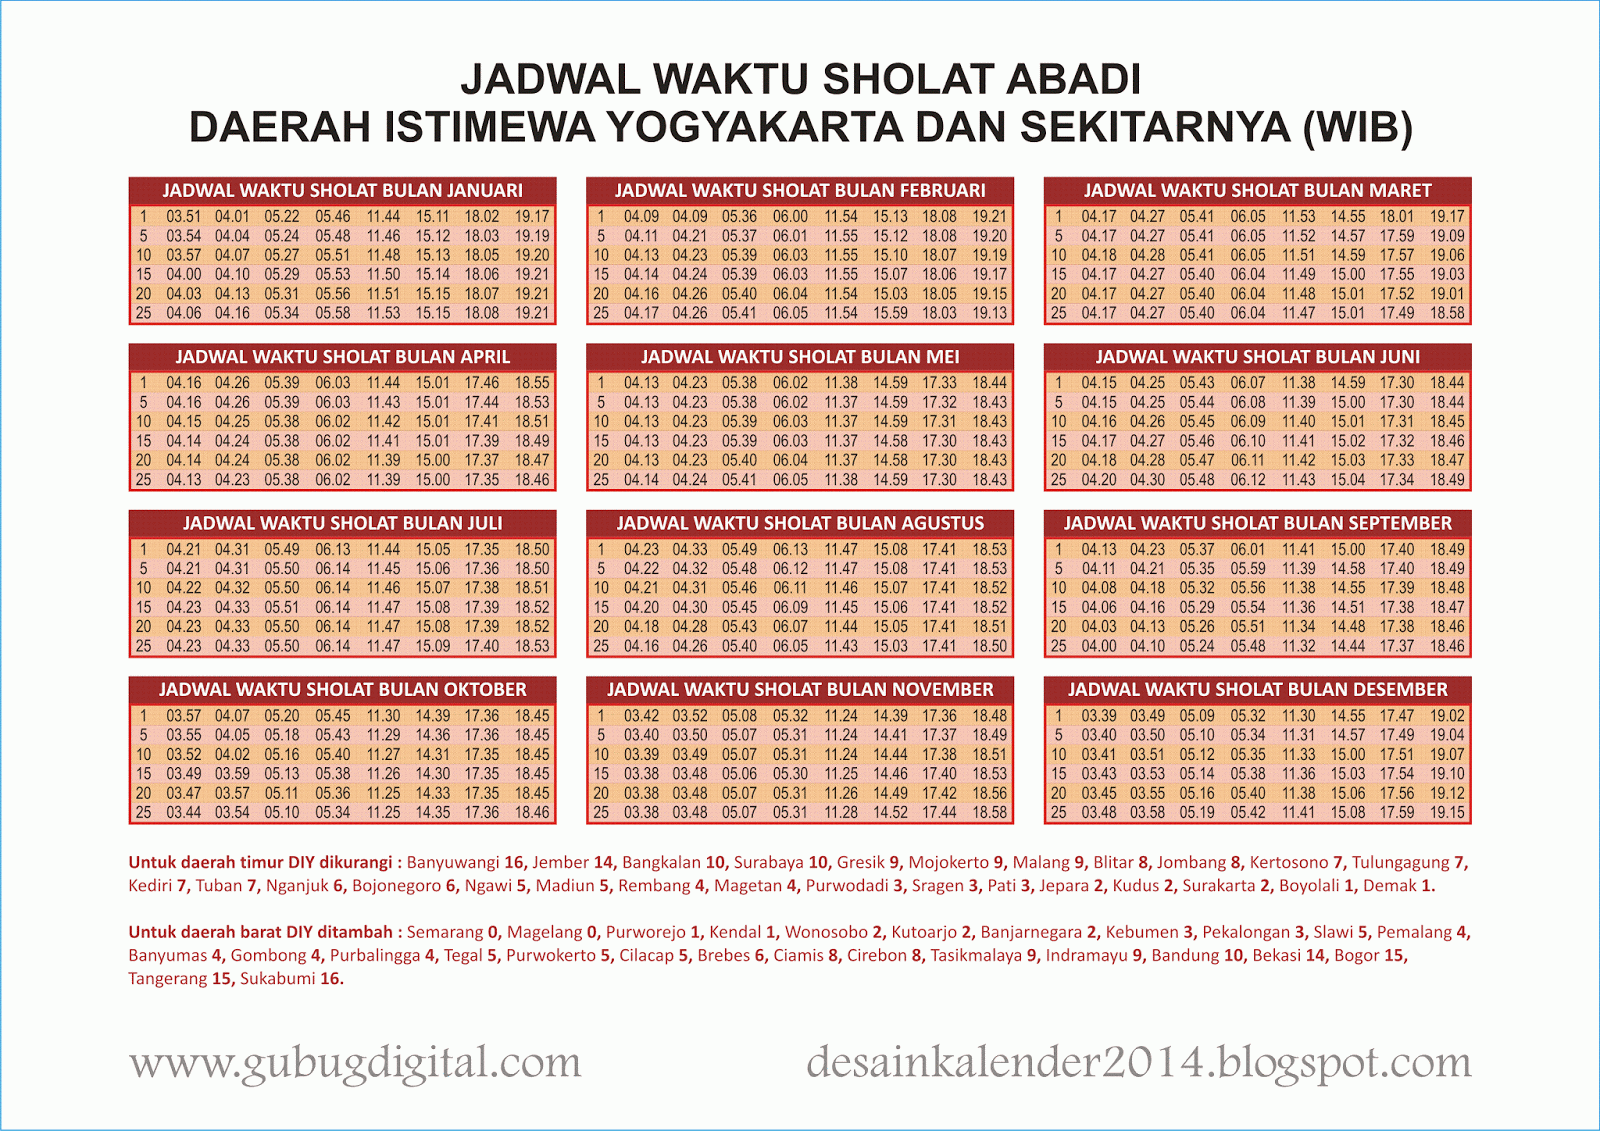 DESAIN KALENDER 2014: JADWAL WAKTU SHOLAT 2014